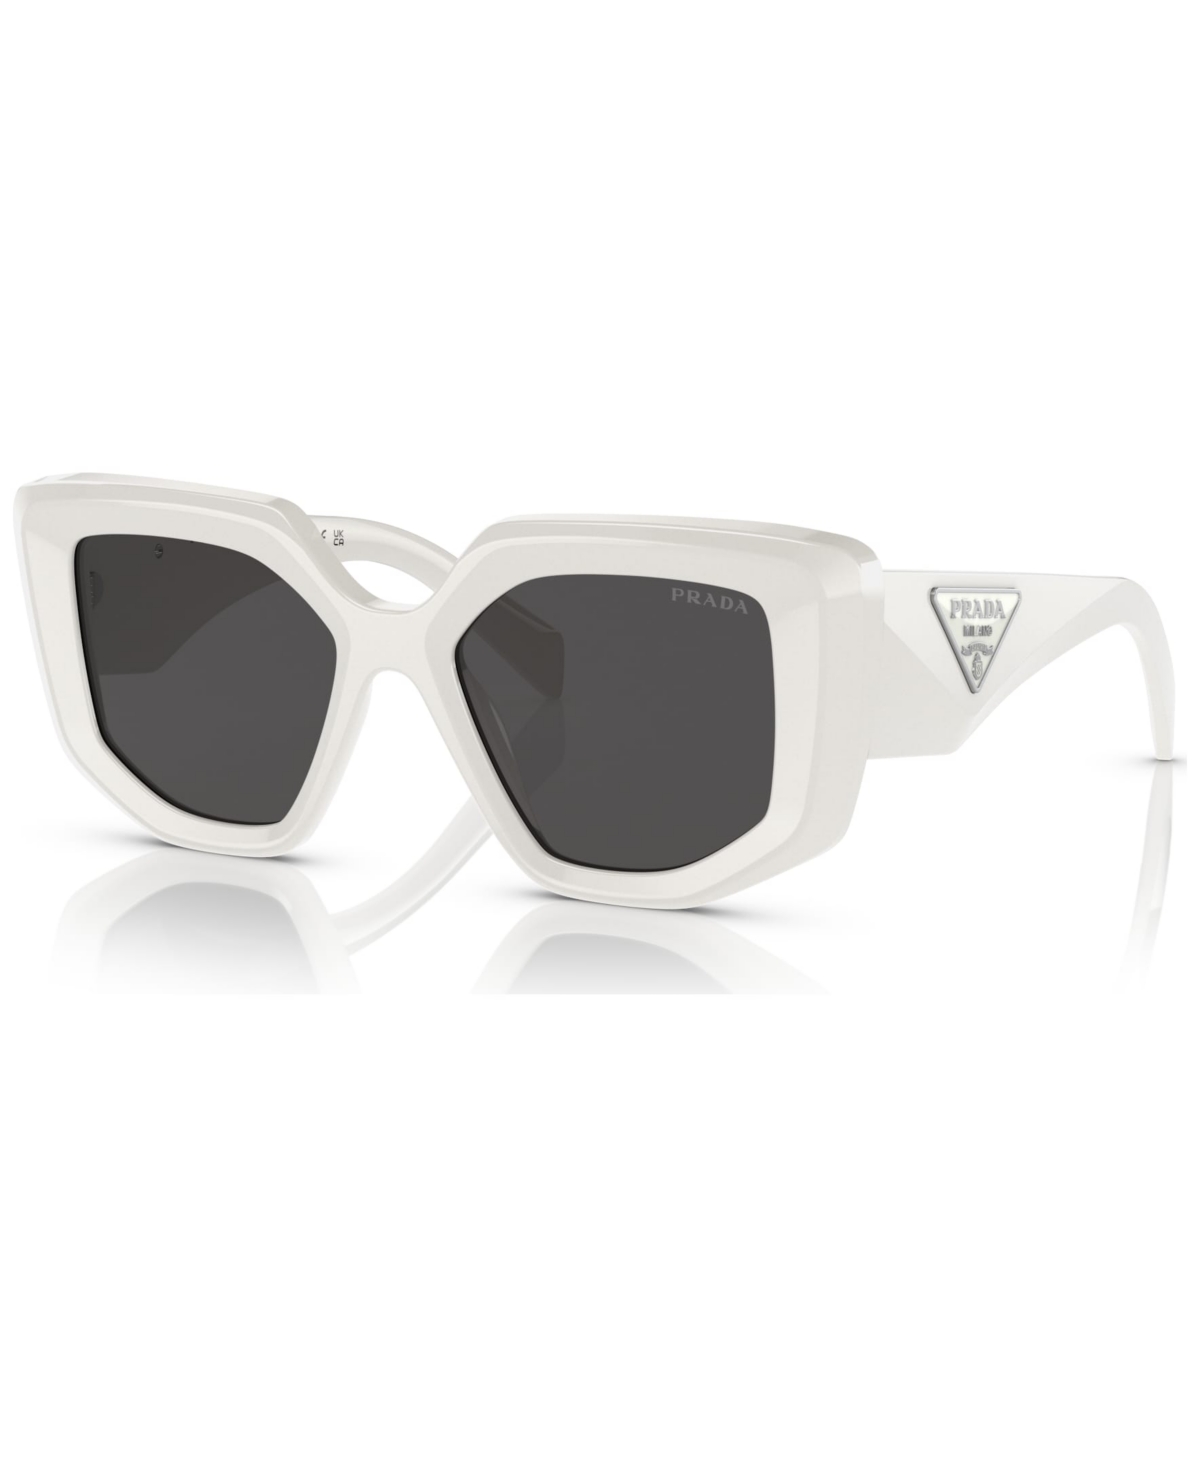 Prada Women's Sunglasses, Pr 14zs In Talc